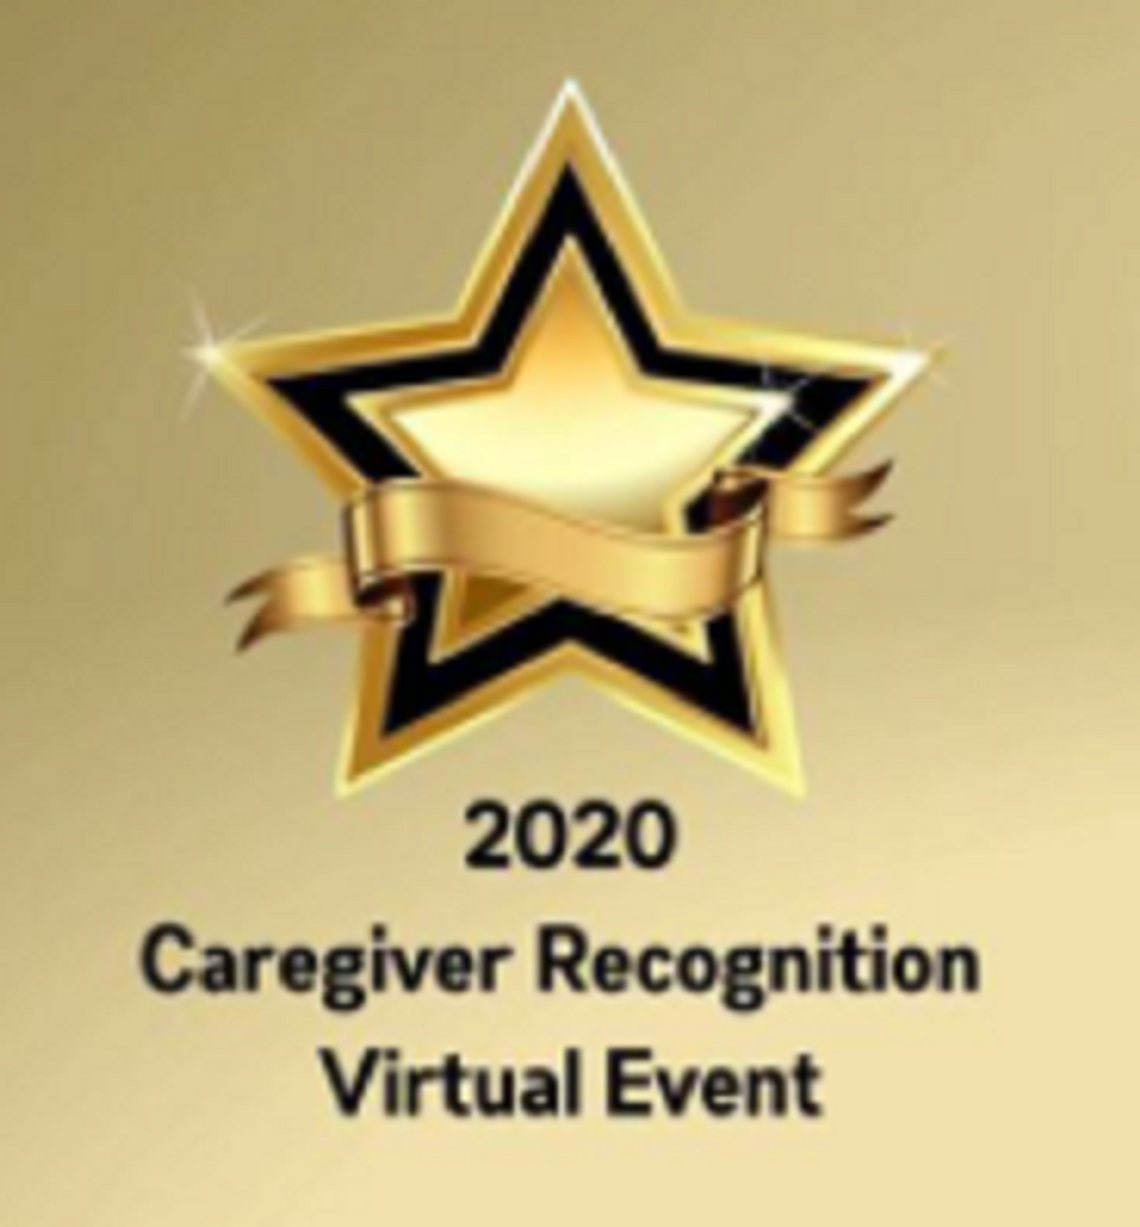 Nevada Caregivers recognition